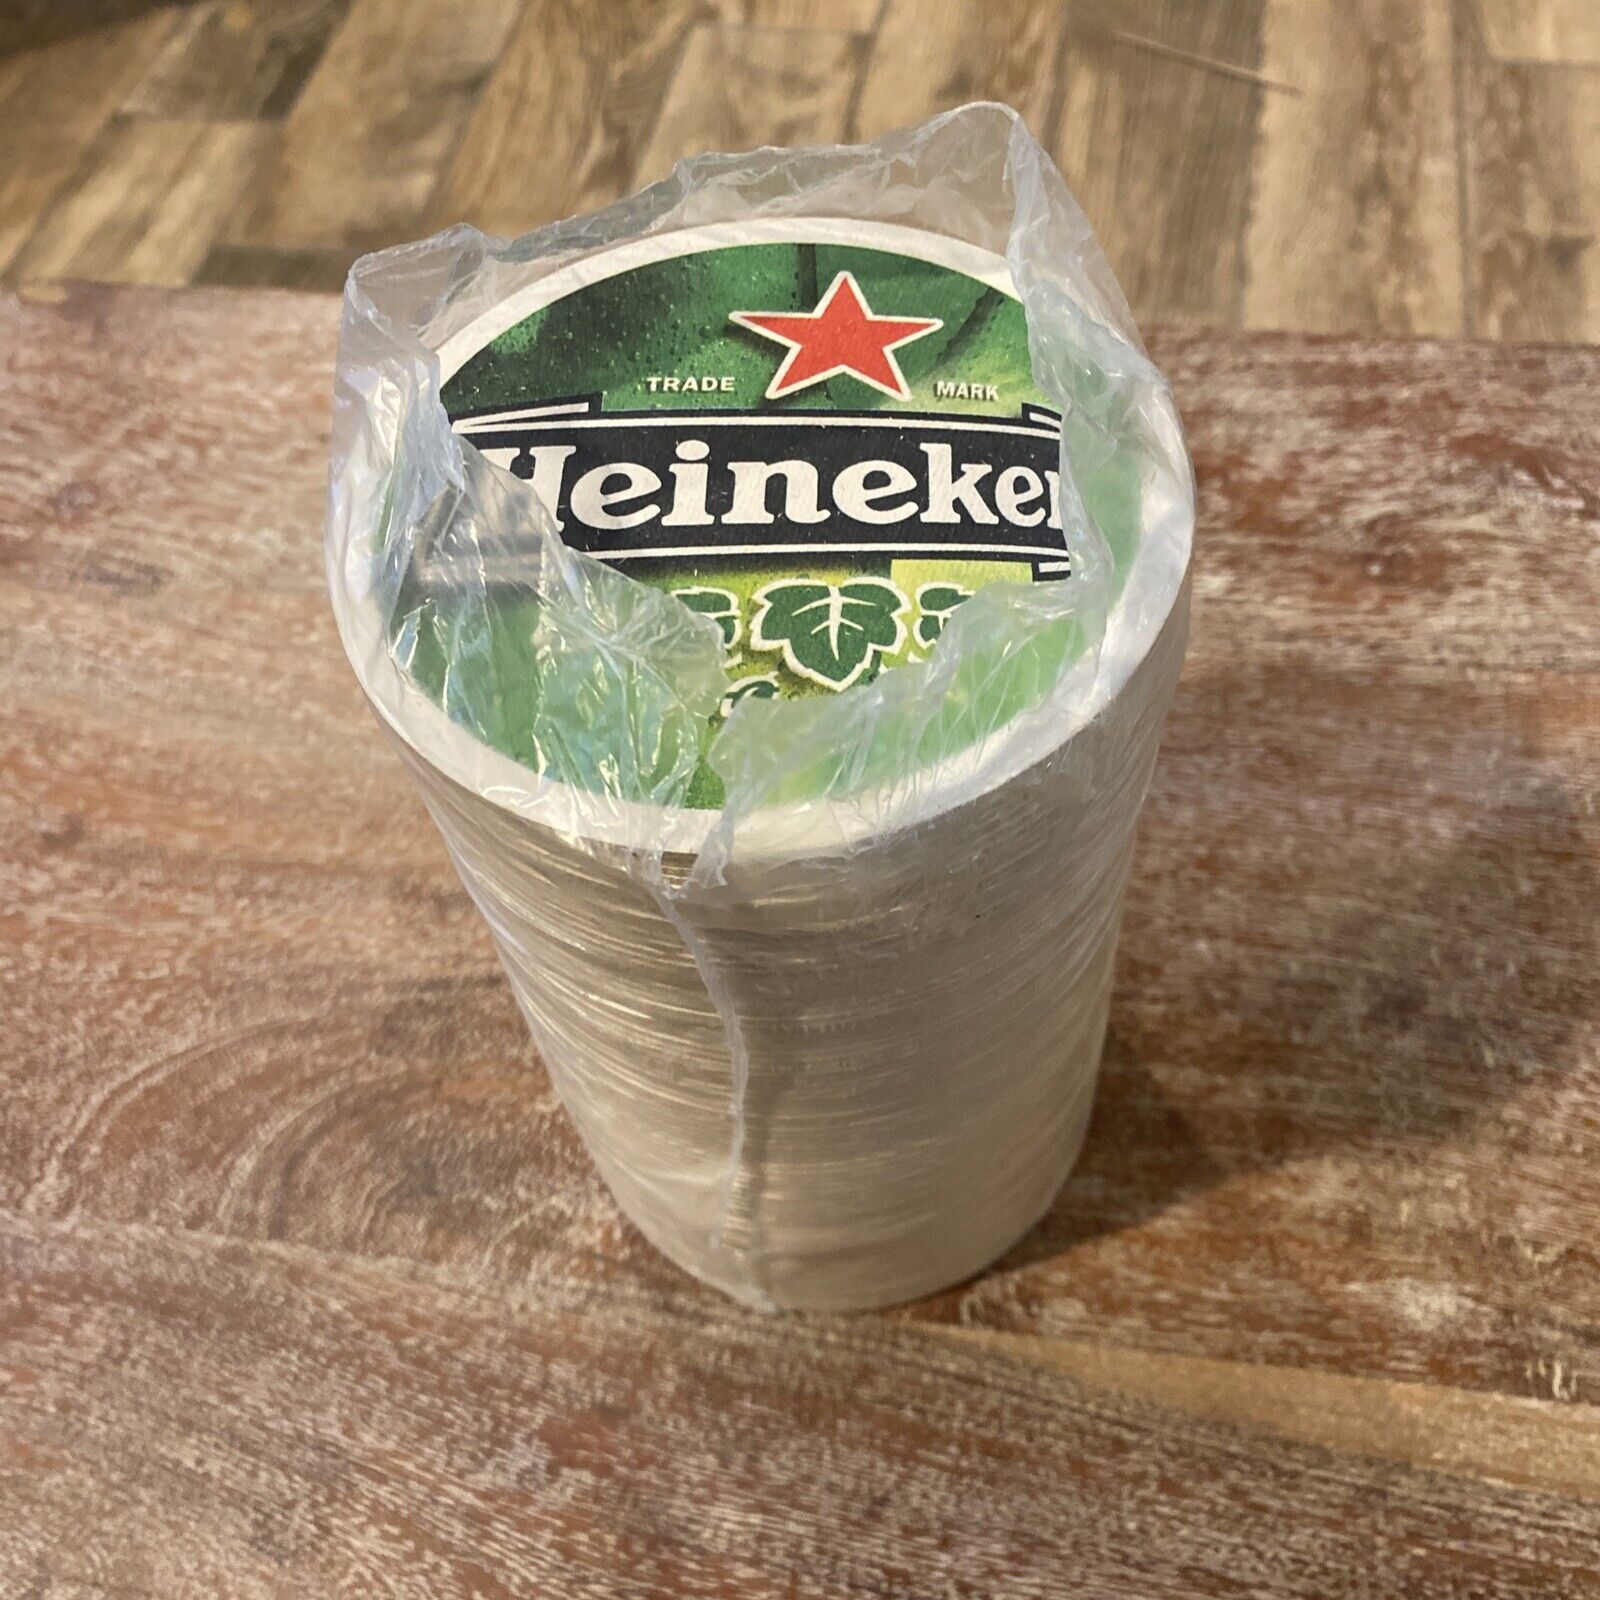 Approx 100 Heineken Beer Coasters - Sealed Sleeve (NEW) - Dated 2000 A-30